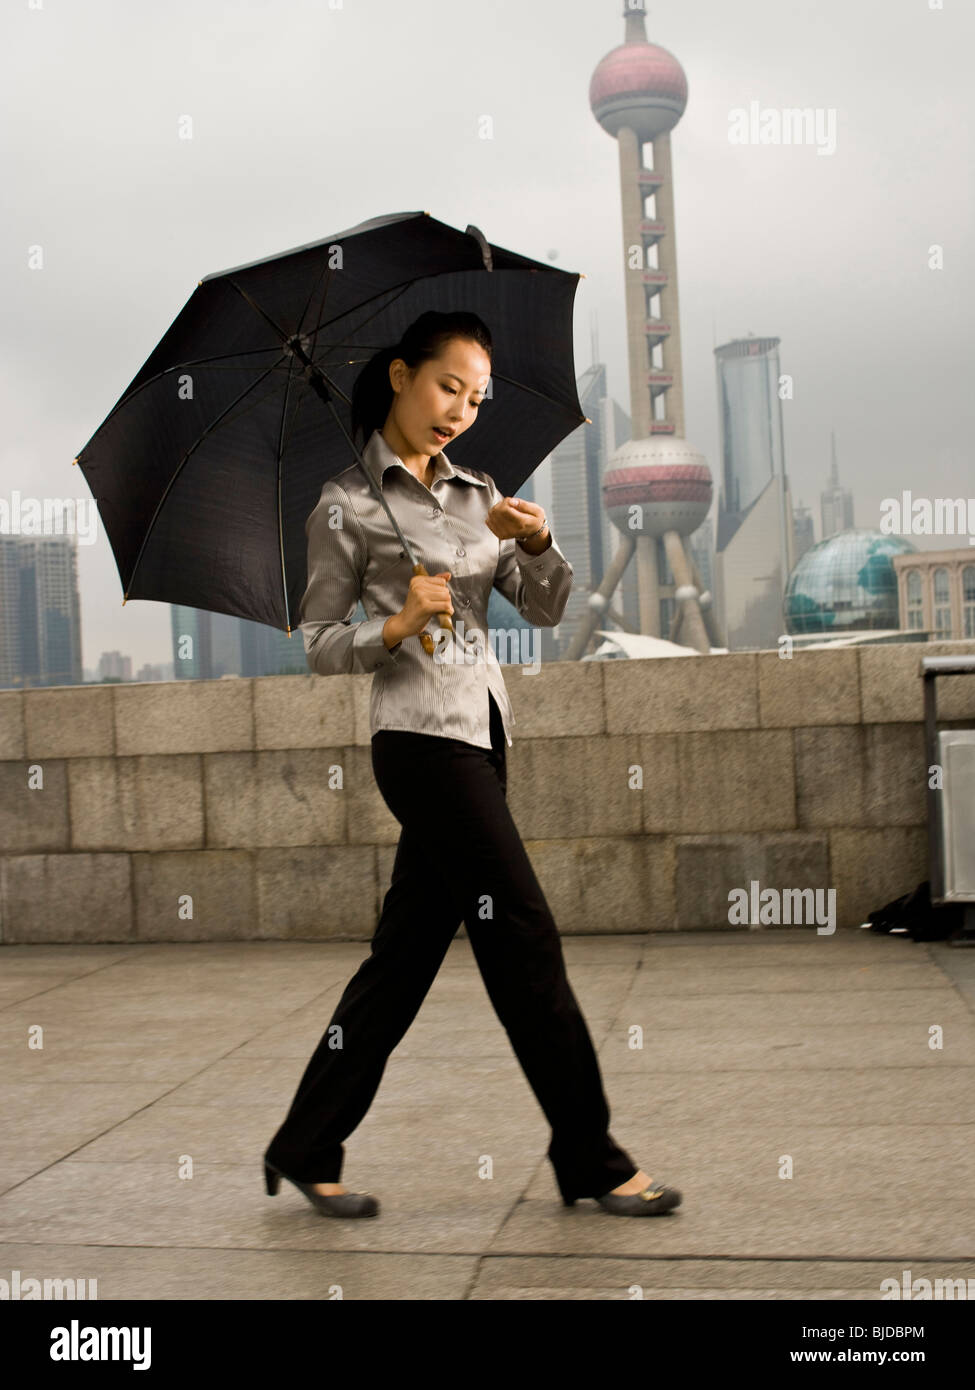 Young woman under an umbrella. Stock Photo